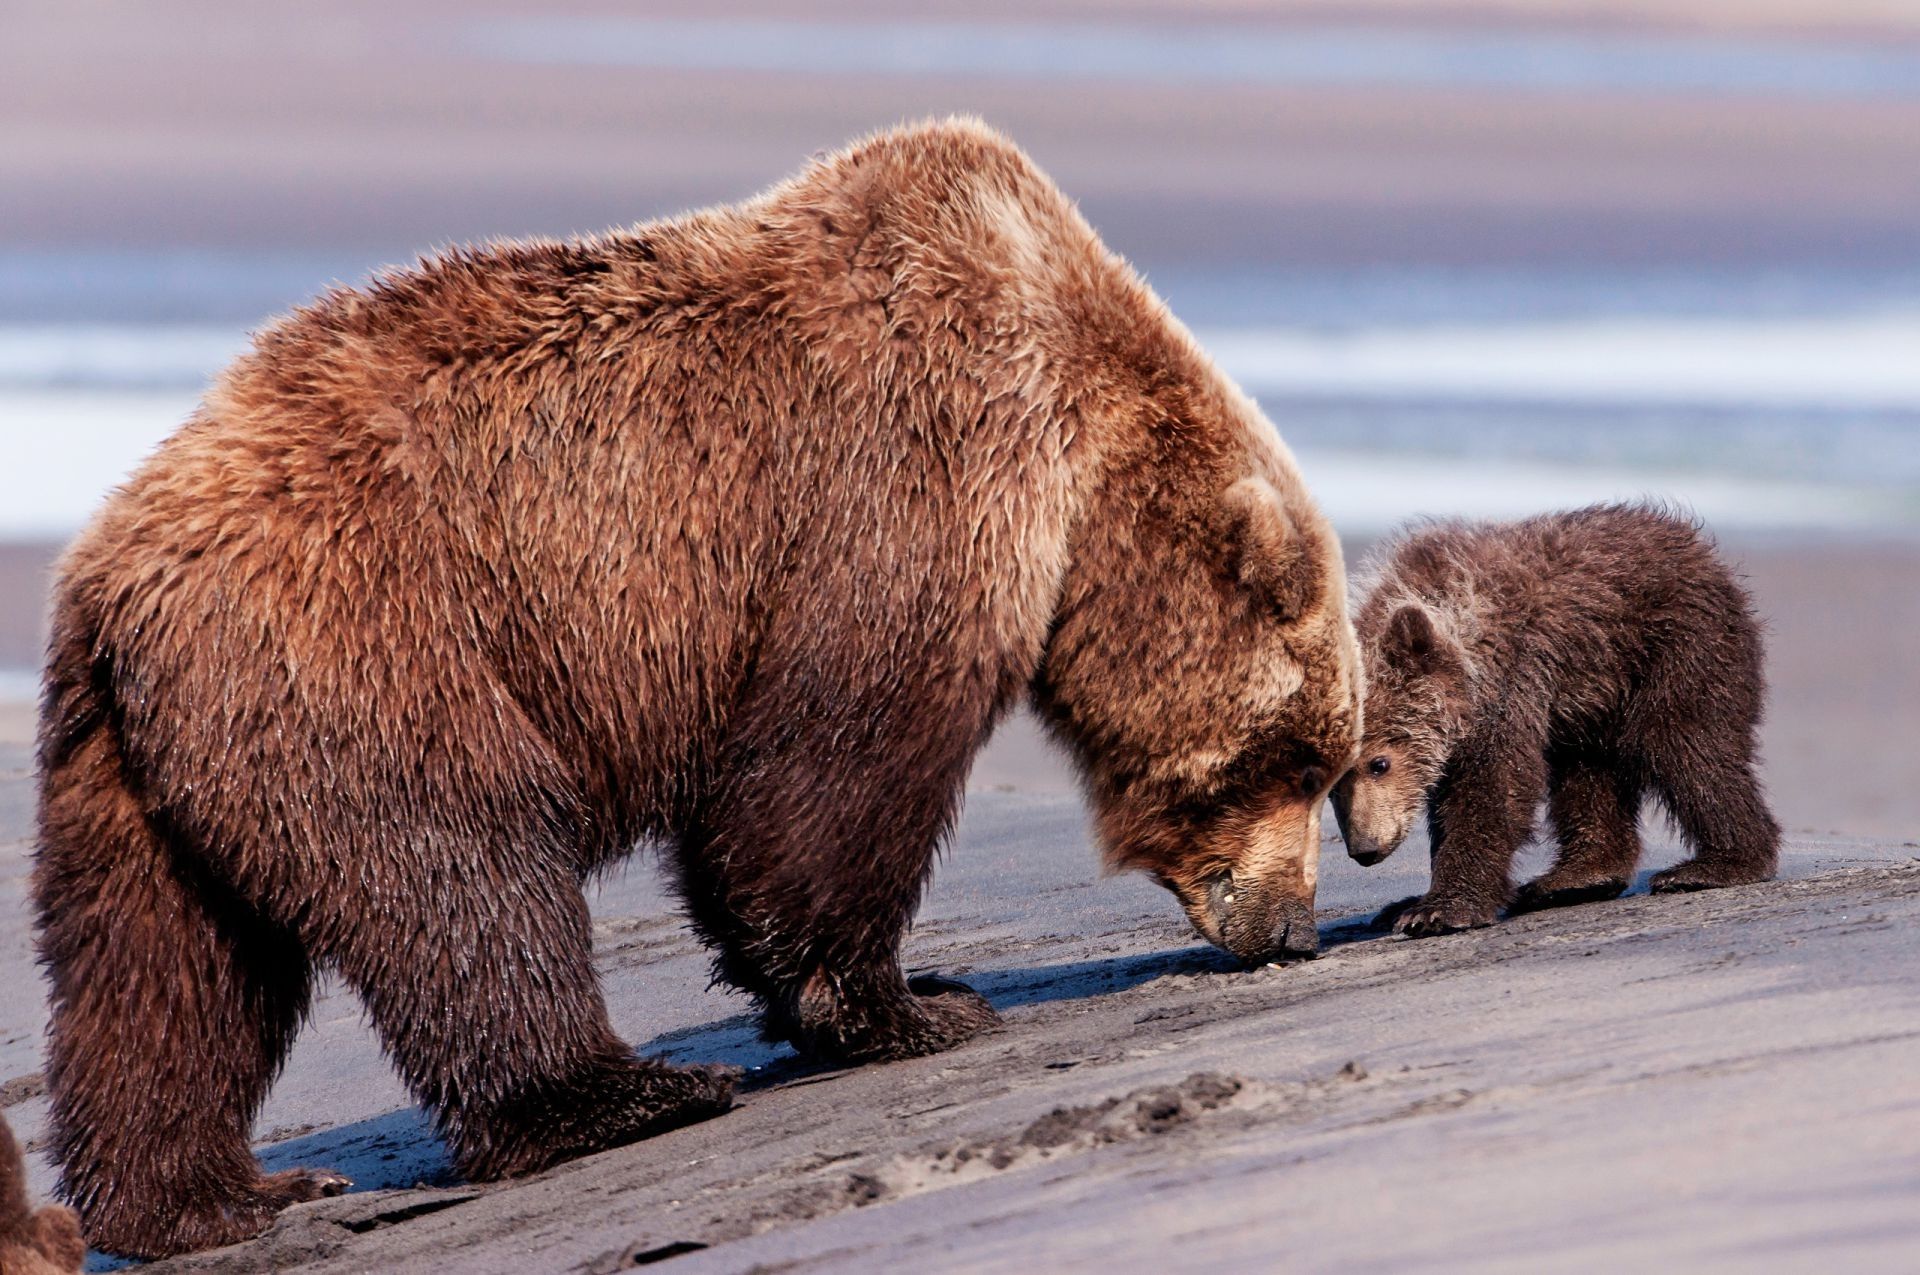 Mama bear Teddy Bear brown bear brown bears